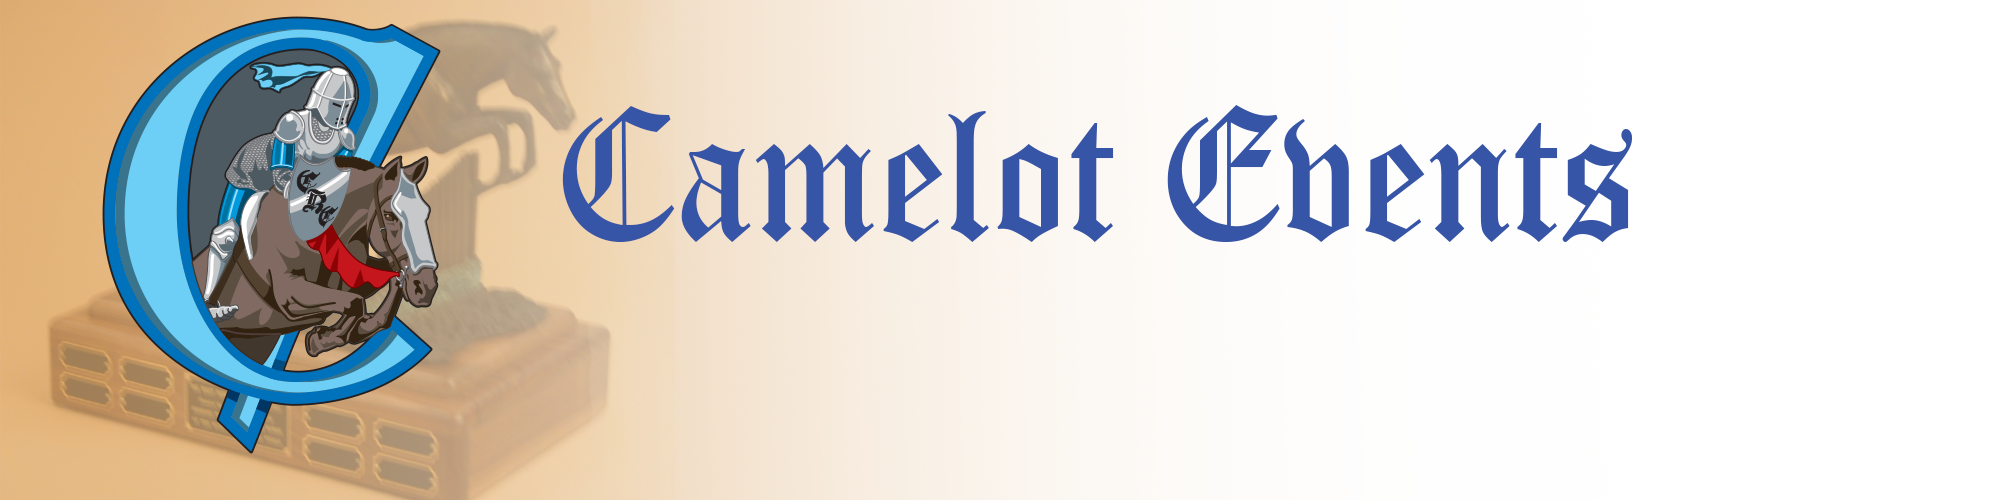 Camelot Events, Logo